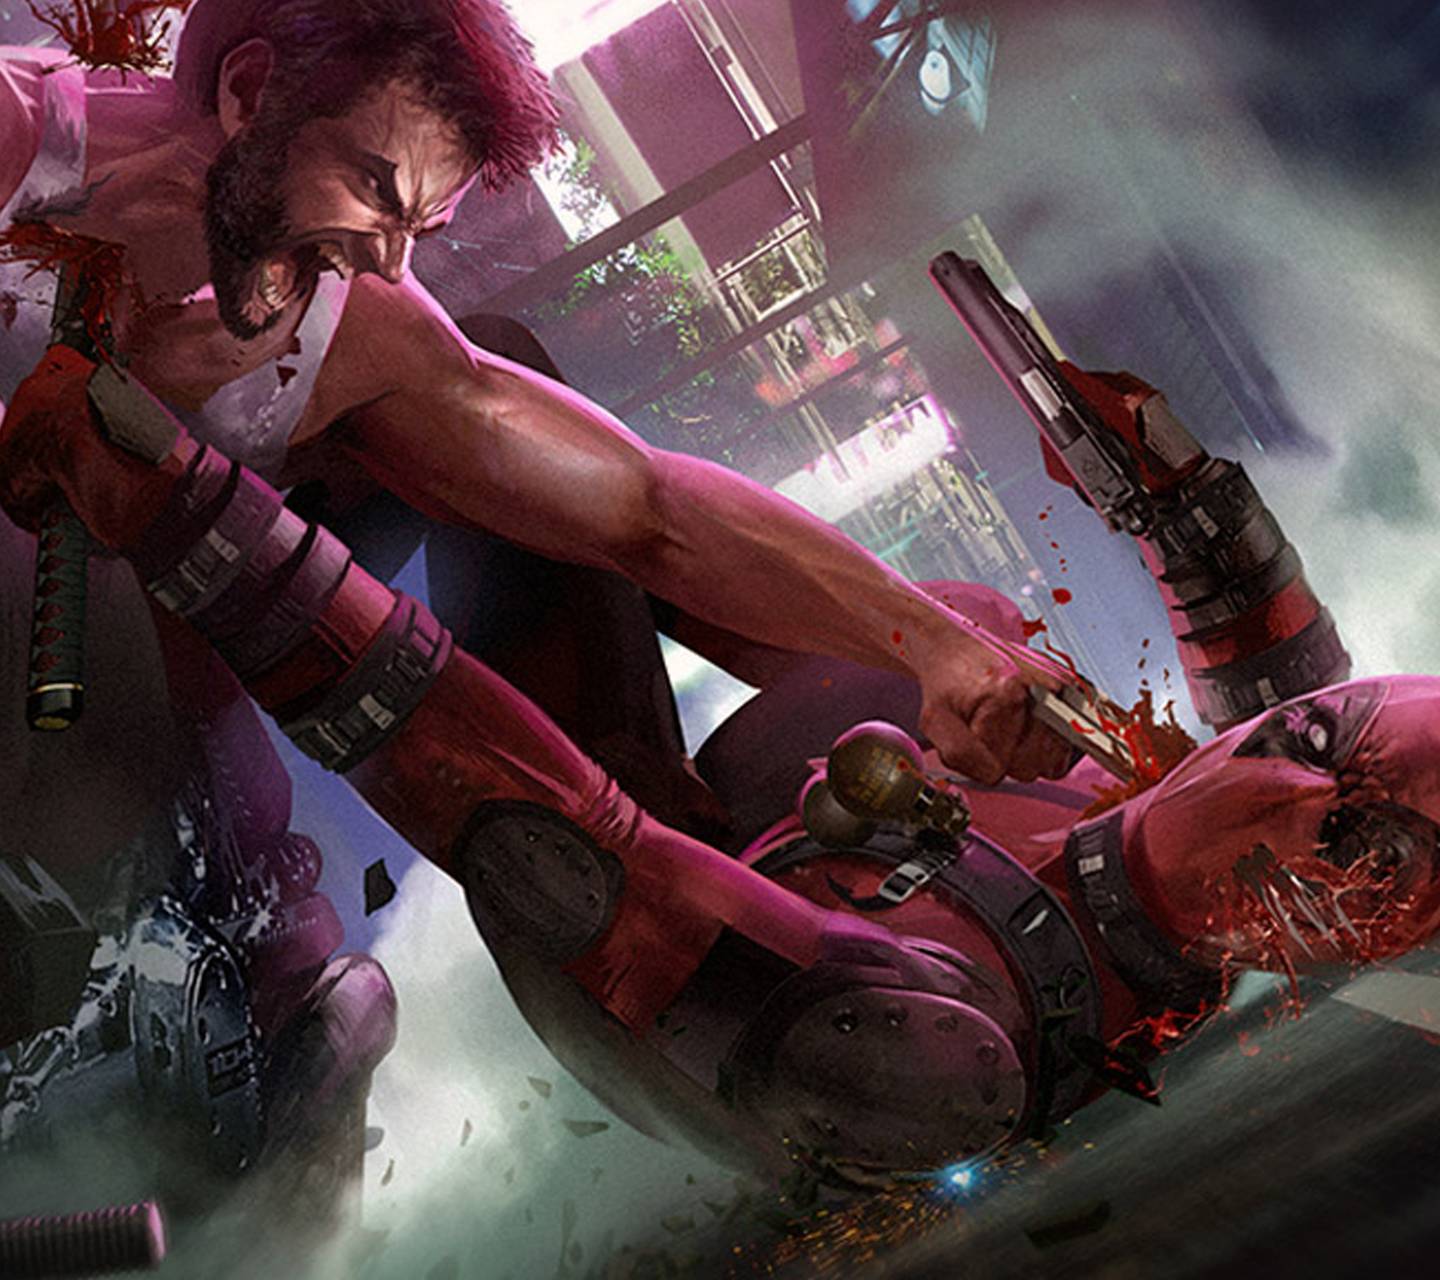 Wolverine vs Deadpool Wallpaper Free Wolverine vs Deadpool